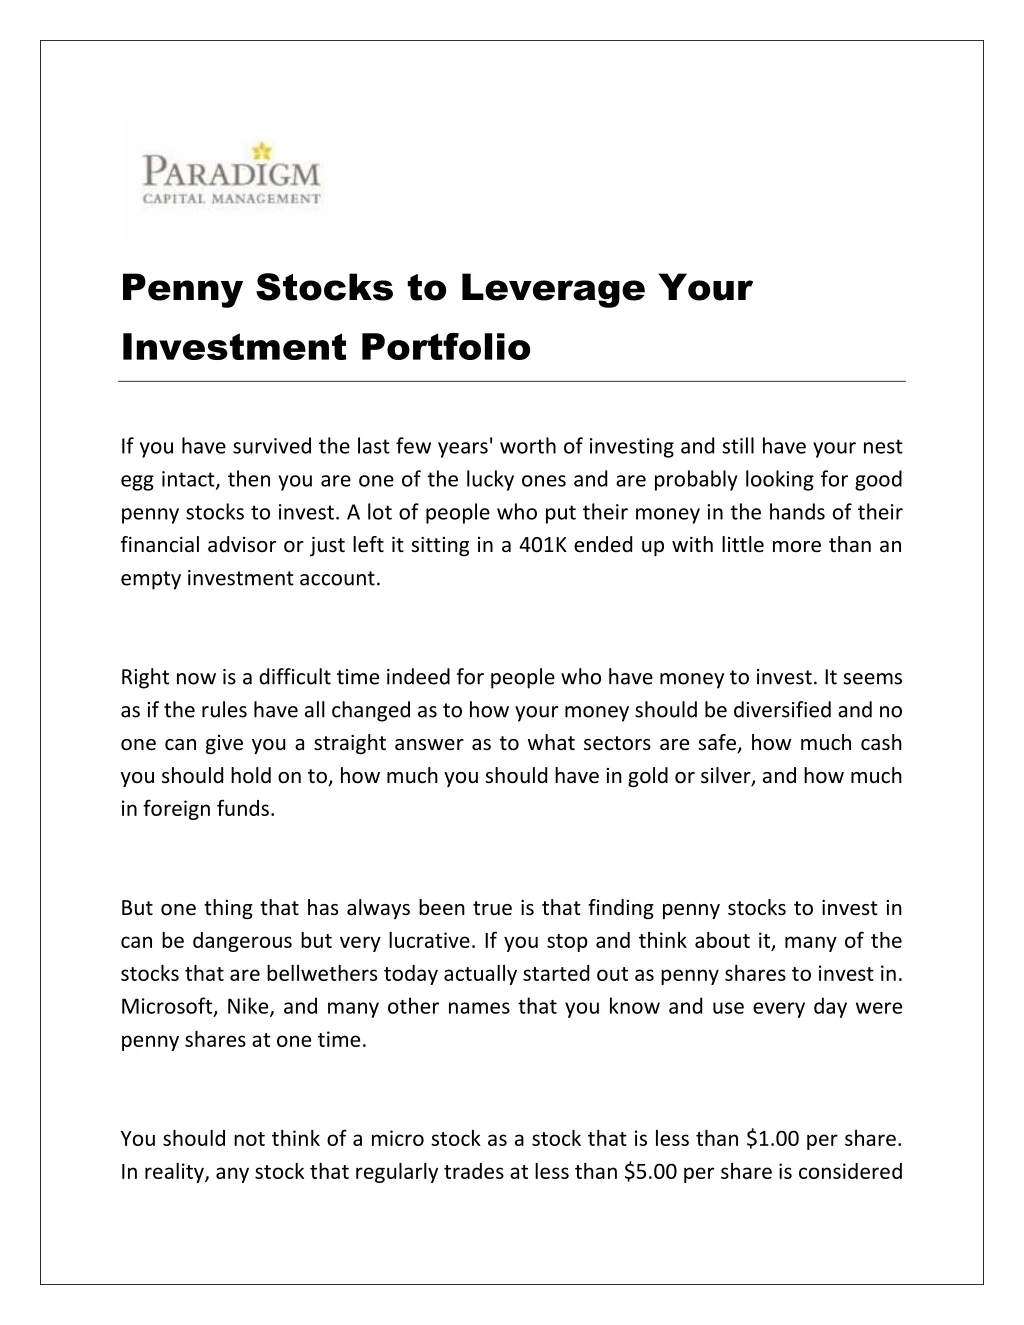 penny stocks to leverage your investment portfolio